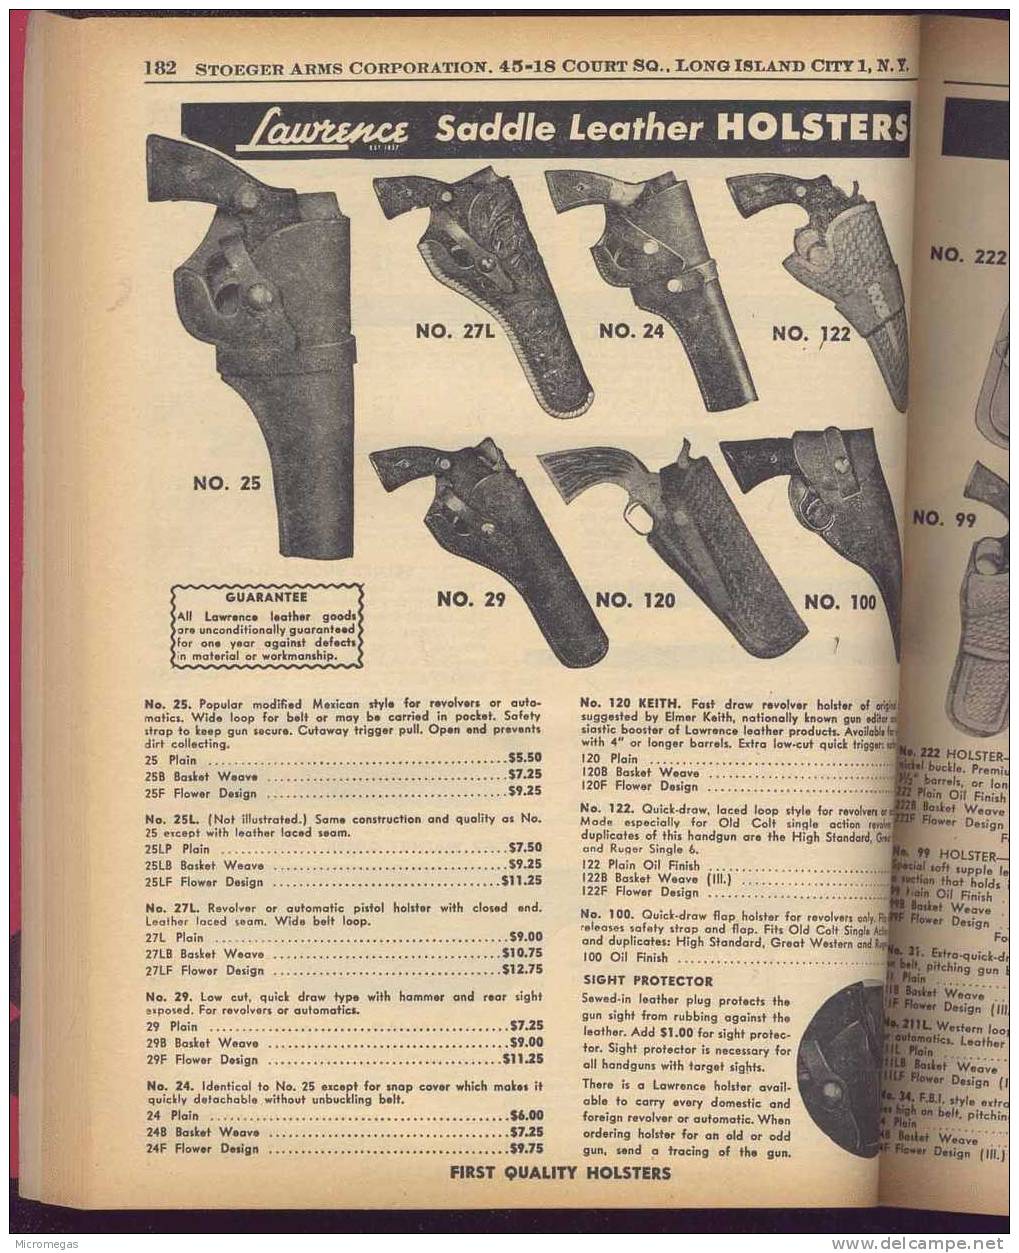 Armes. Chasse. The Shooter's Bible Golden Anniversary Edition 1959 - Autres & Non Classés